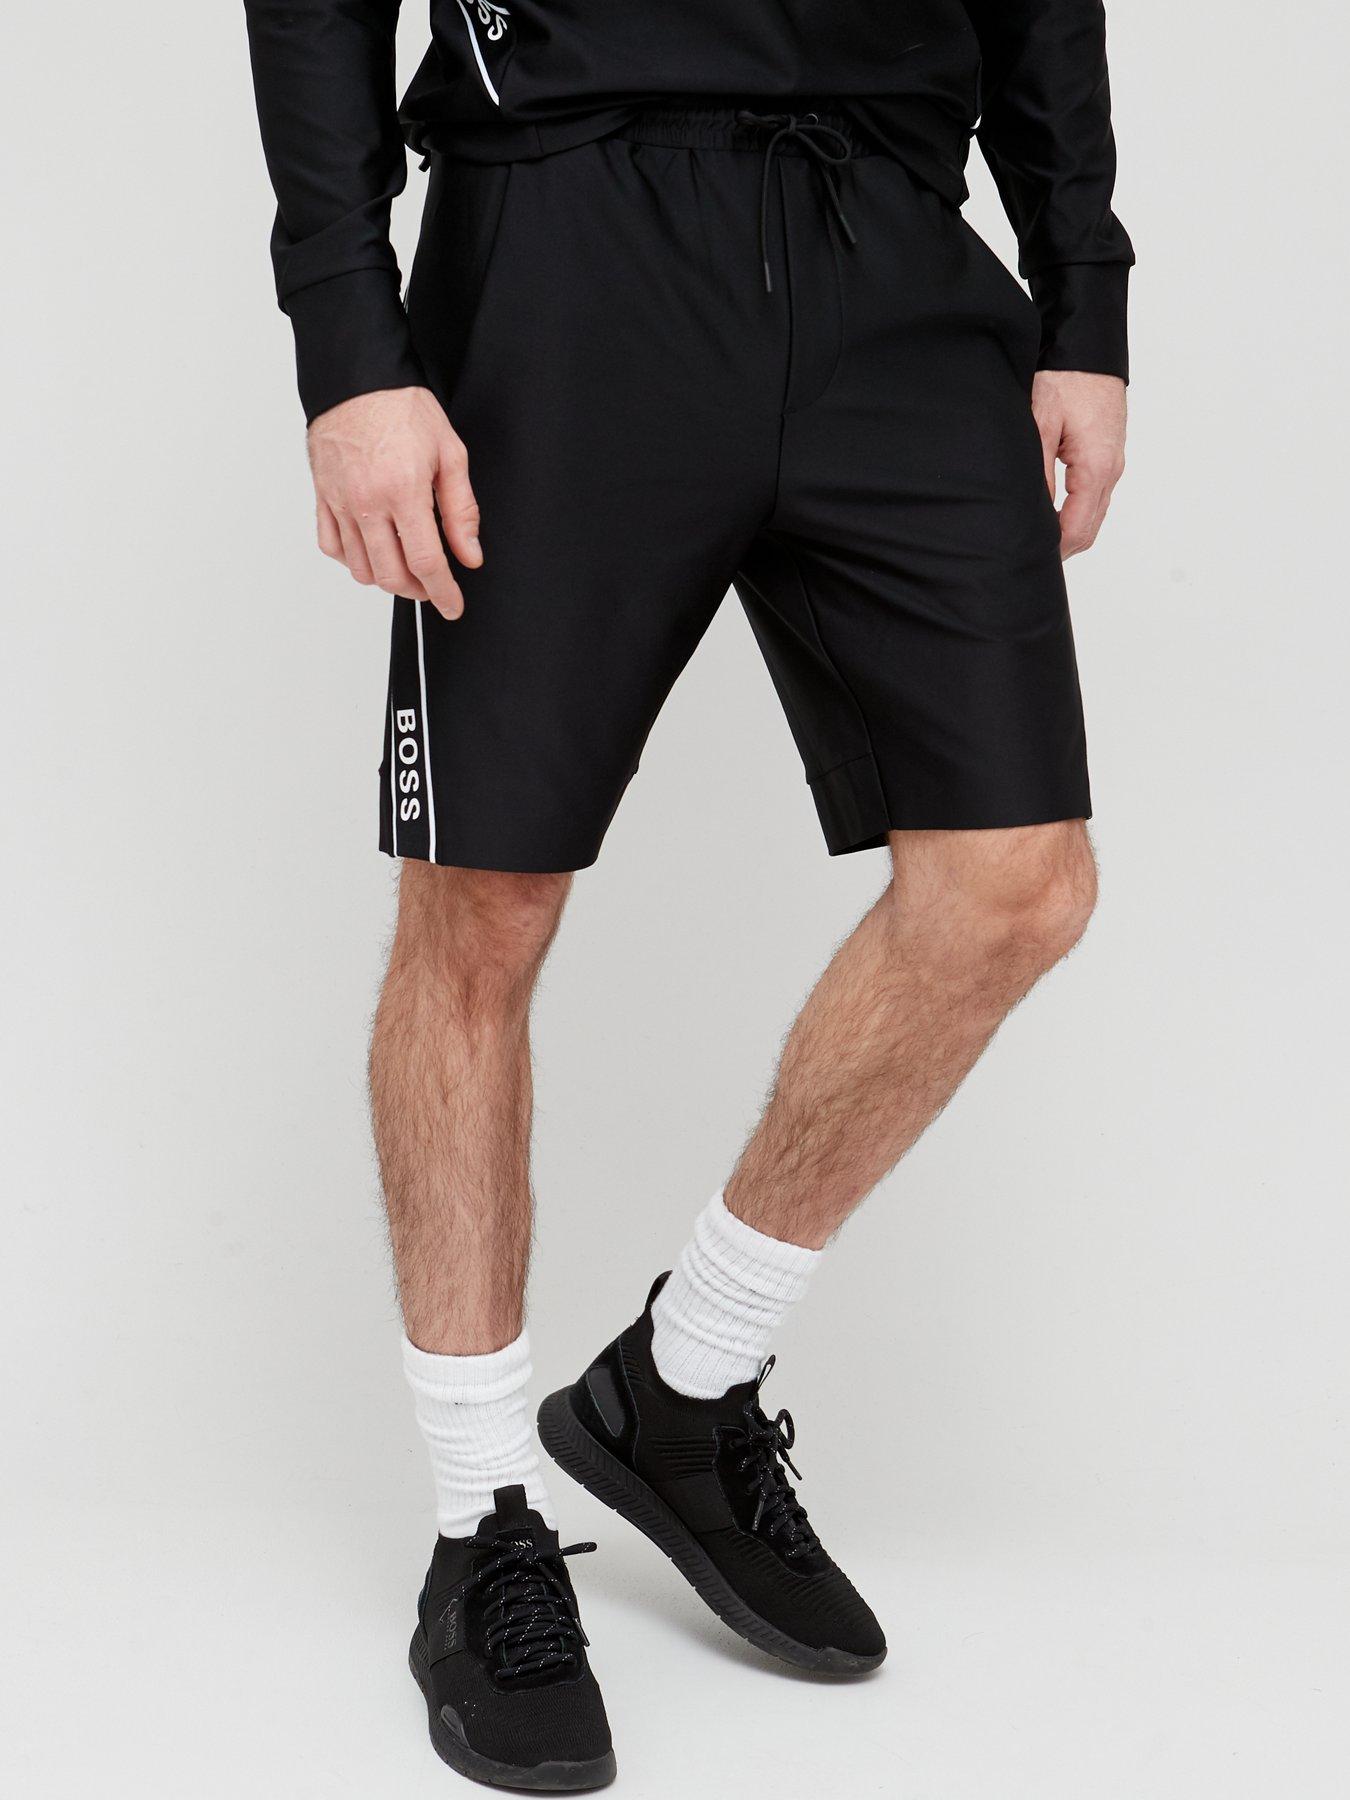  Headlo Gym Shorts - Black